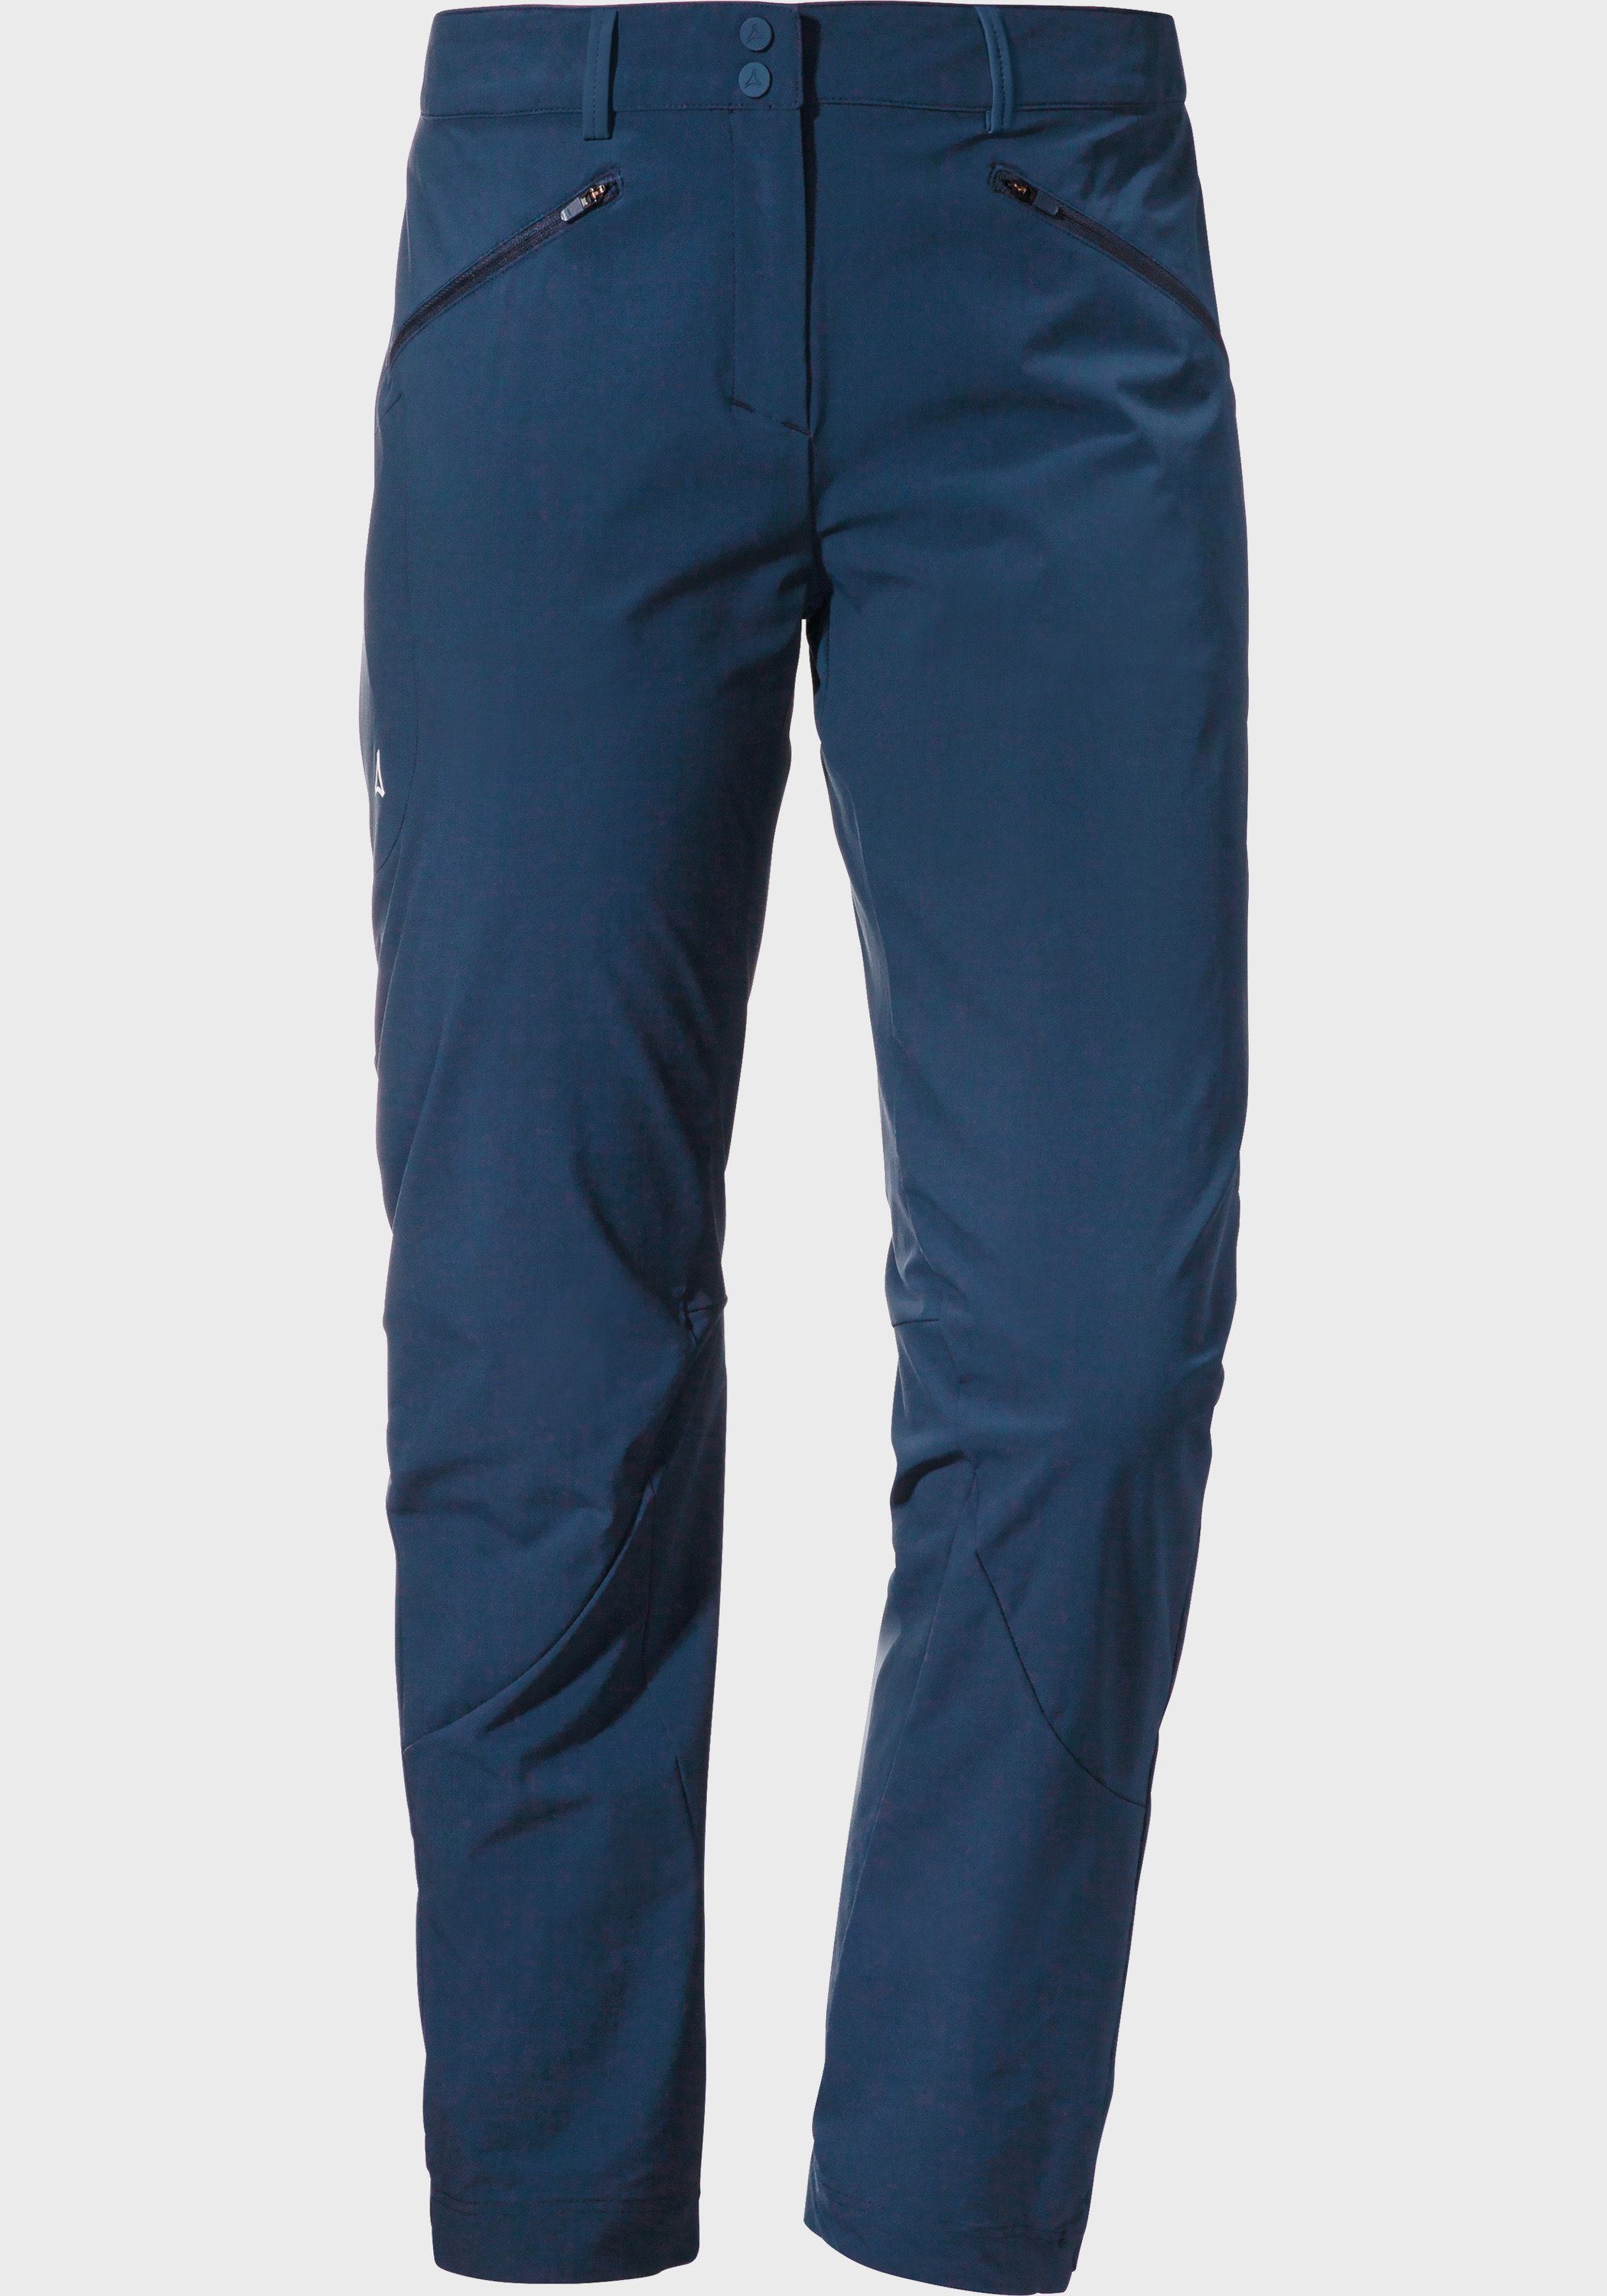 Schöffel Outdoorhose Pants Hestad L blau | Outdoorhosen